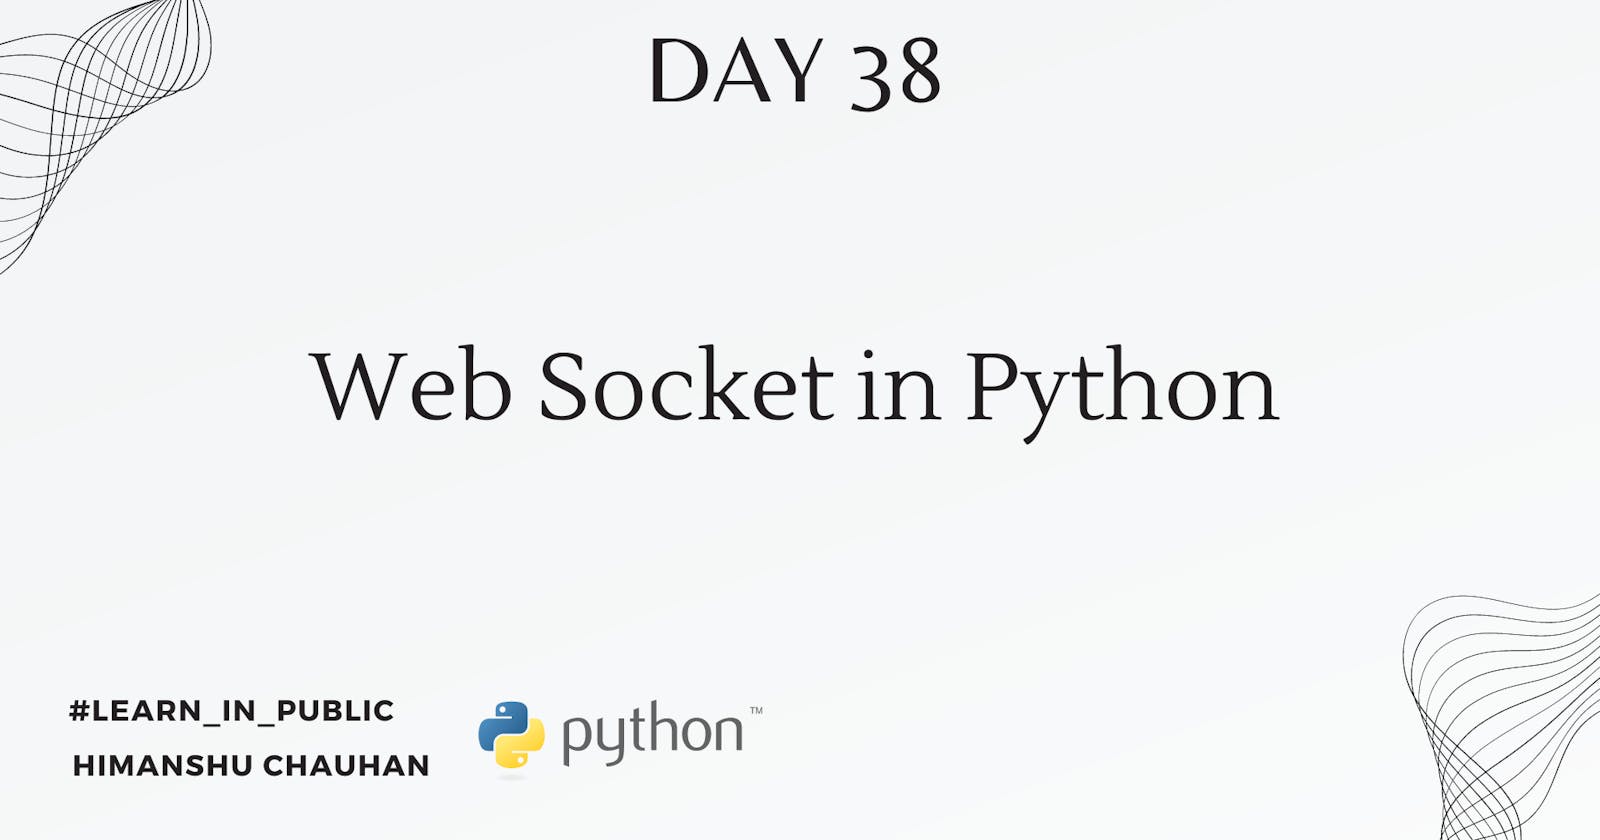 Day 38: Web Socket in Python